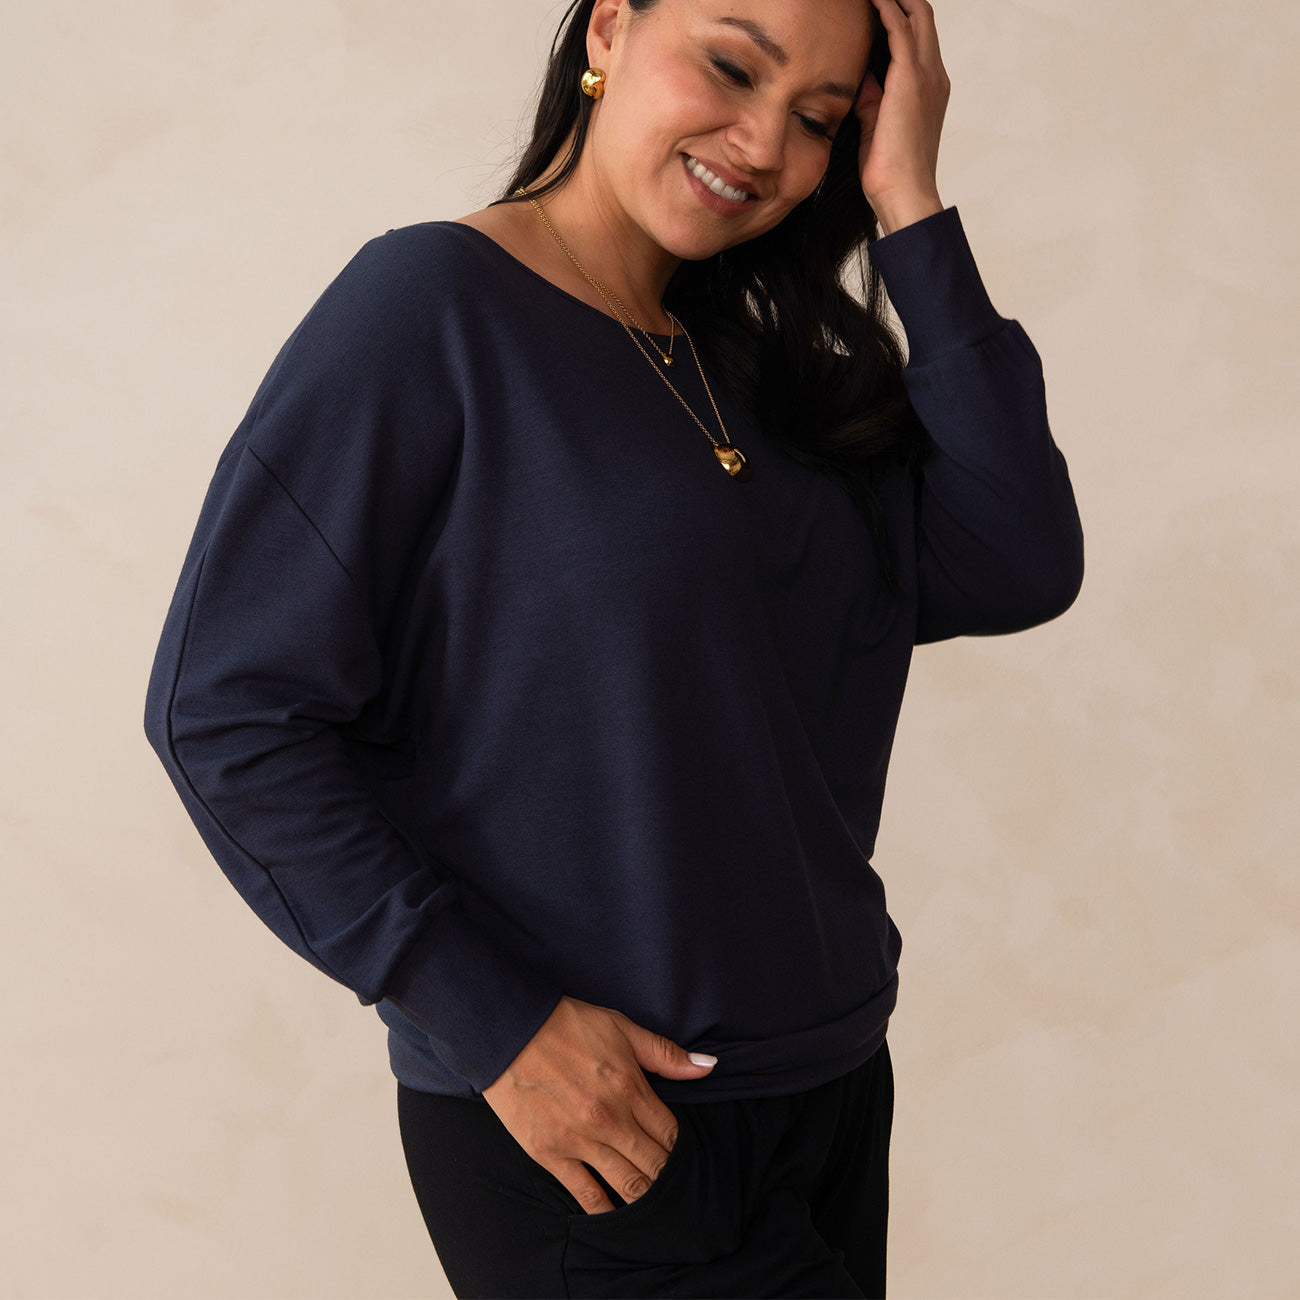 woman wearing a navy long sleeve sweatshirt